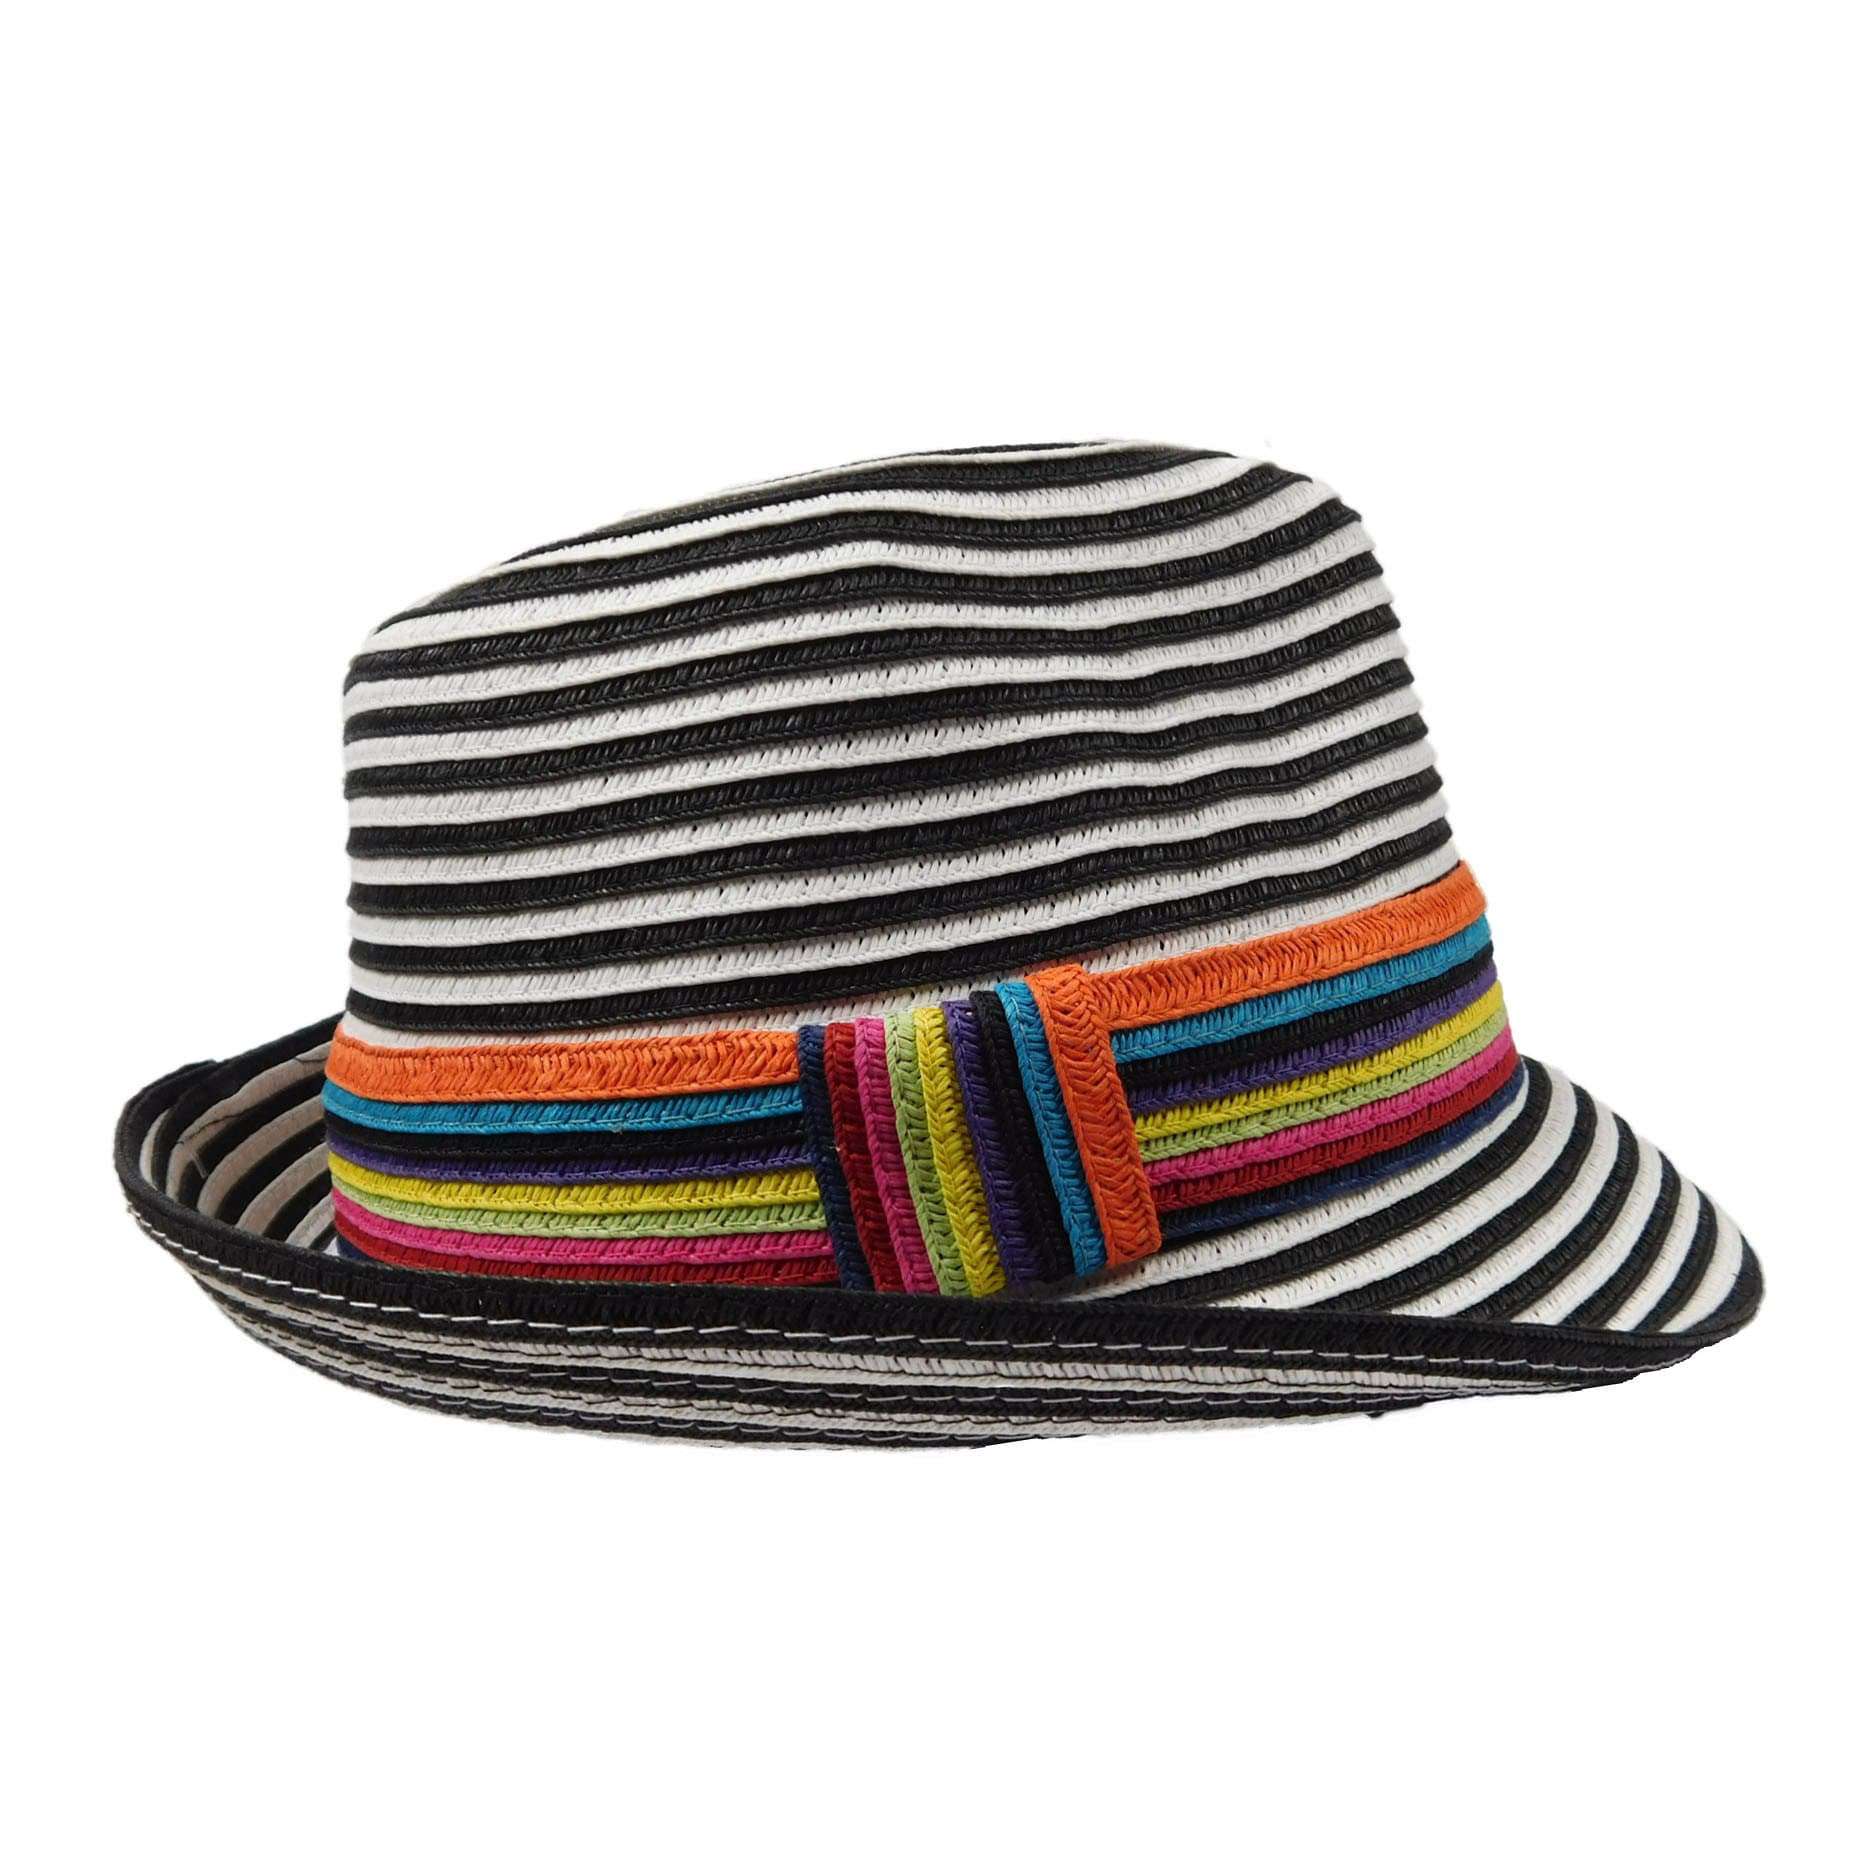 Black and White Striped Summer Fedora Hat - Jeanne Simmons Hats Fedora Hat Jeanne Simmons js8520BK Black / White  